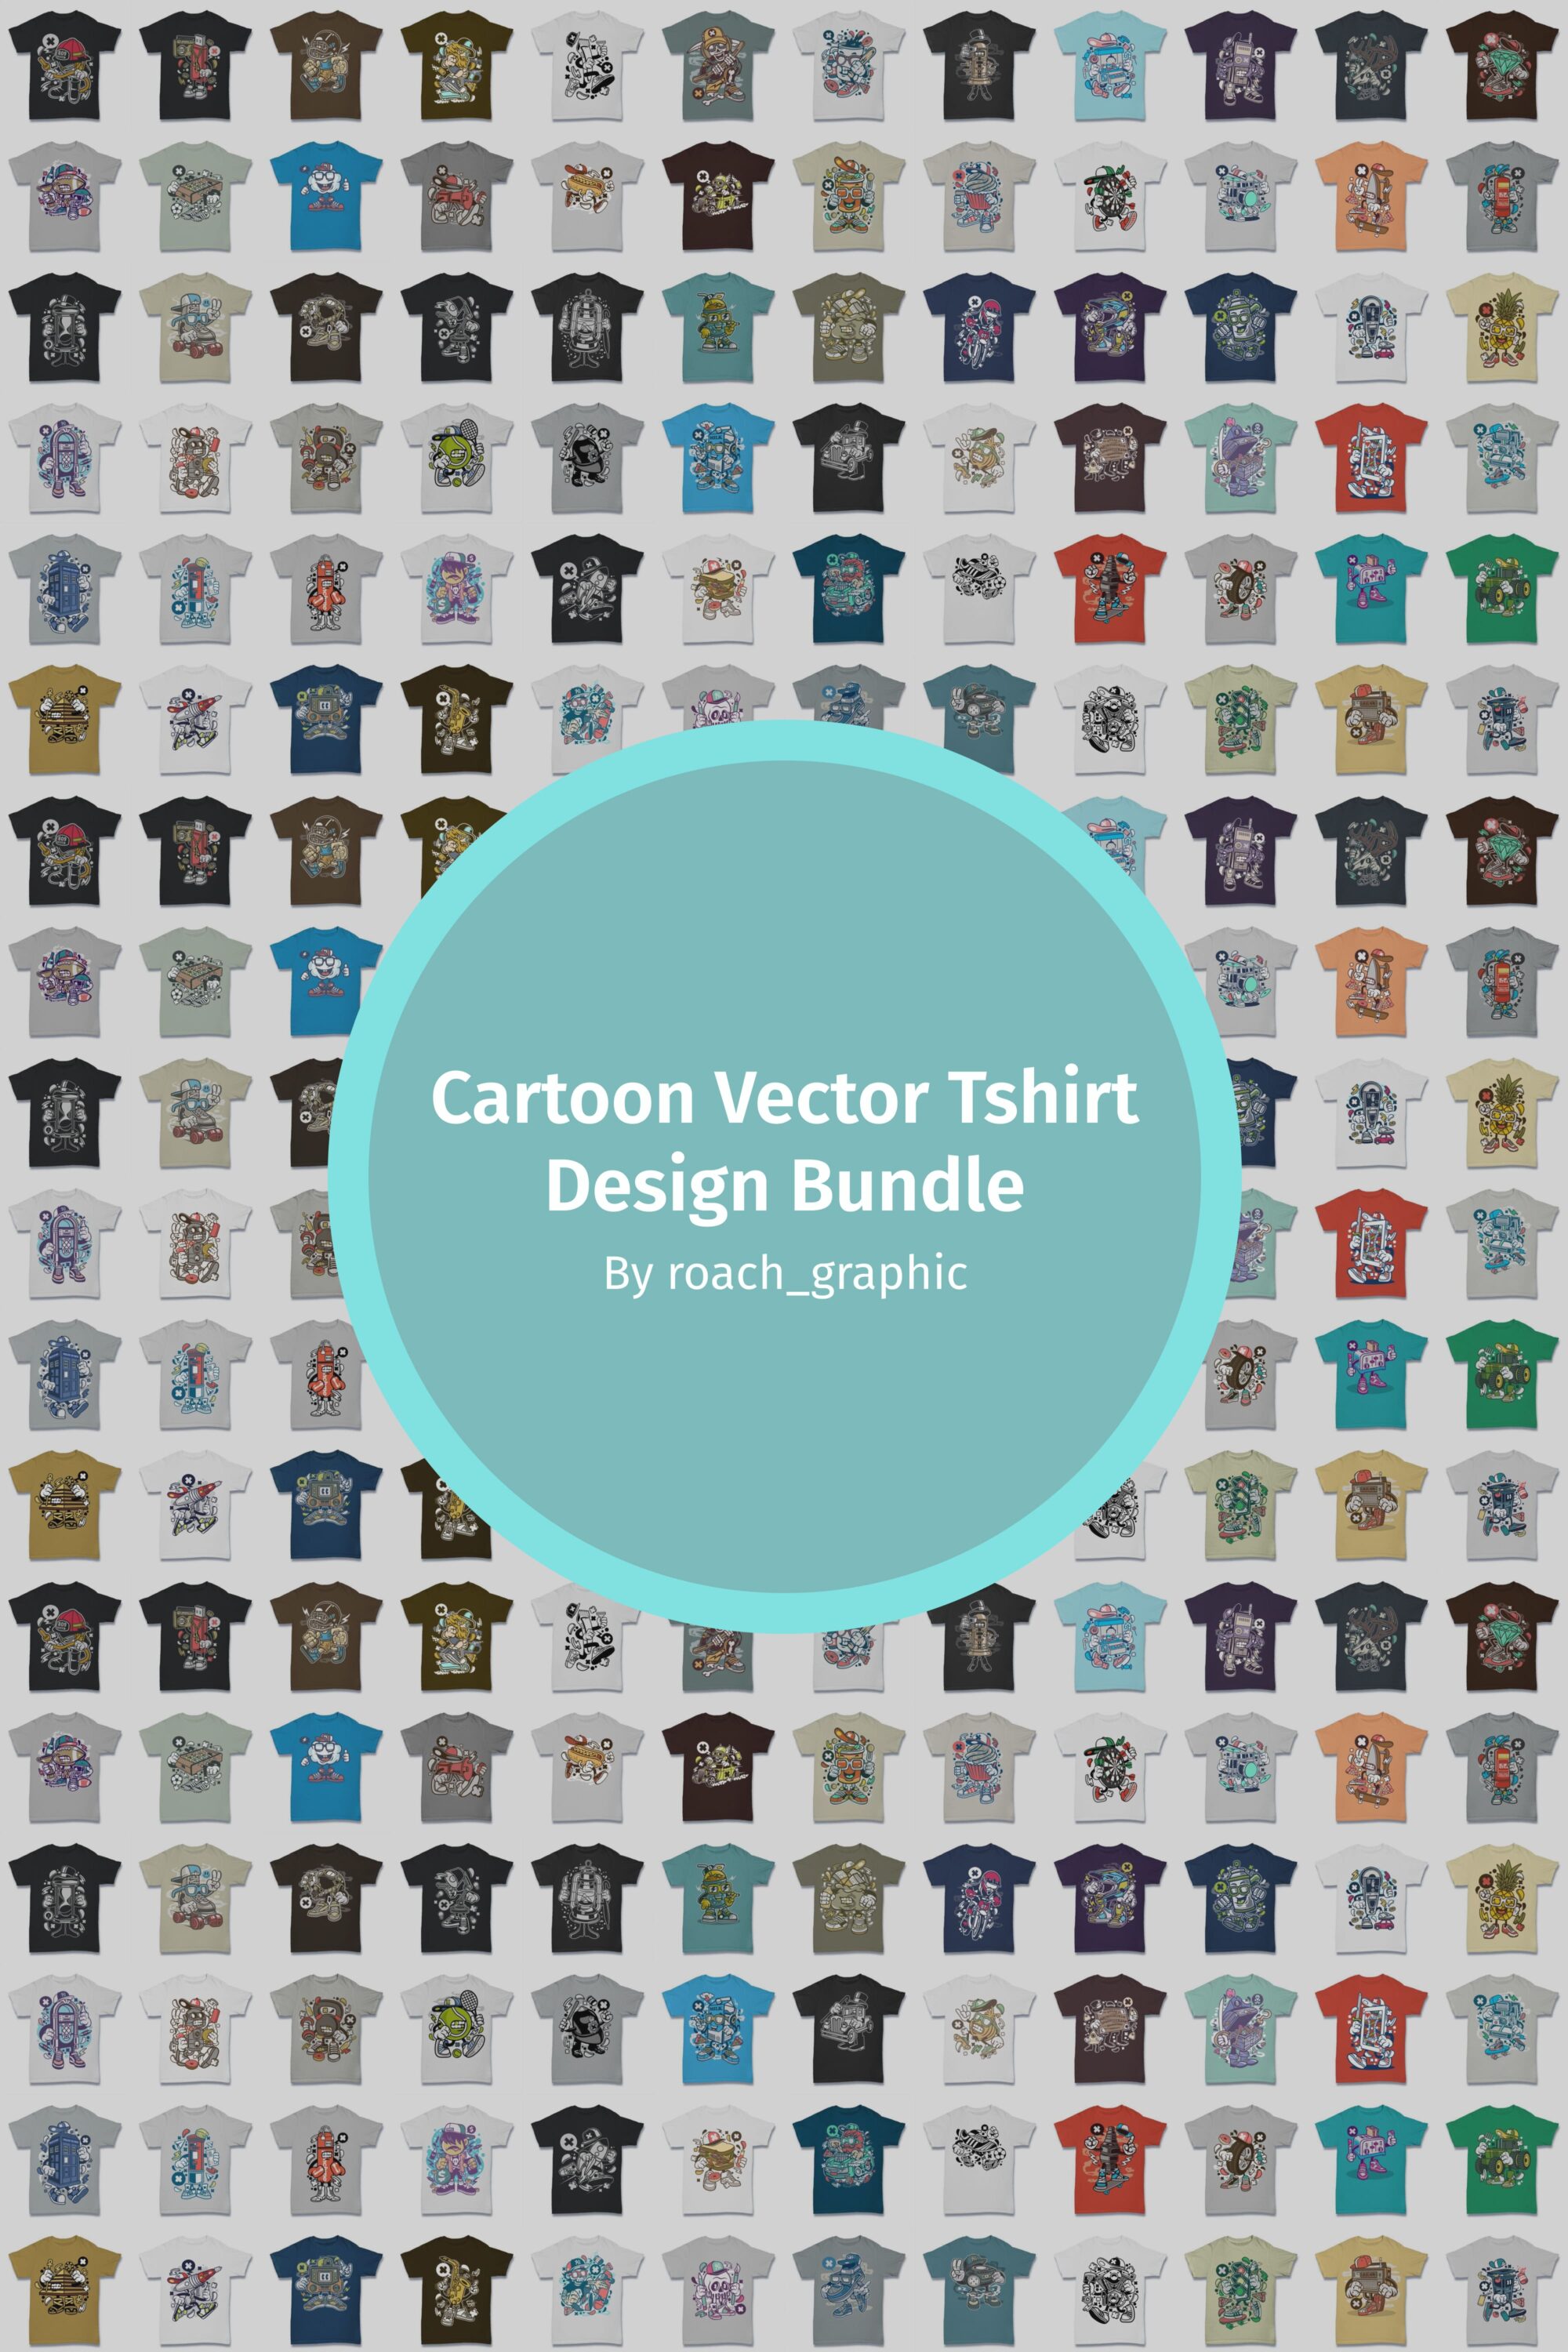 Cartoon Vector Tshirt Design Bundle pinterest image.